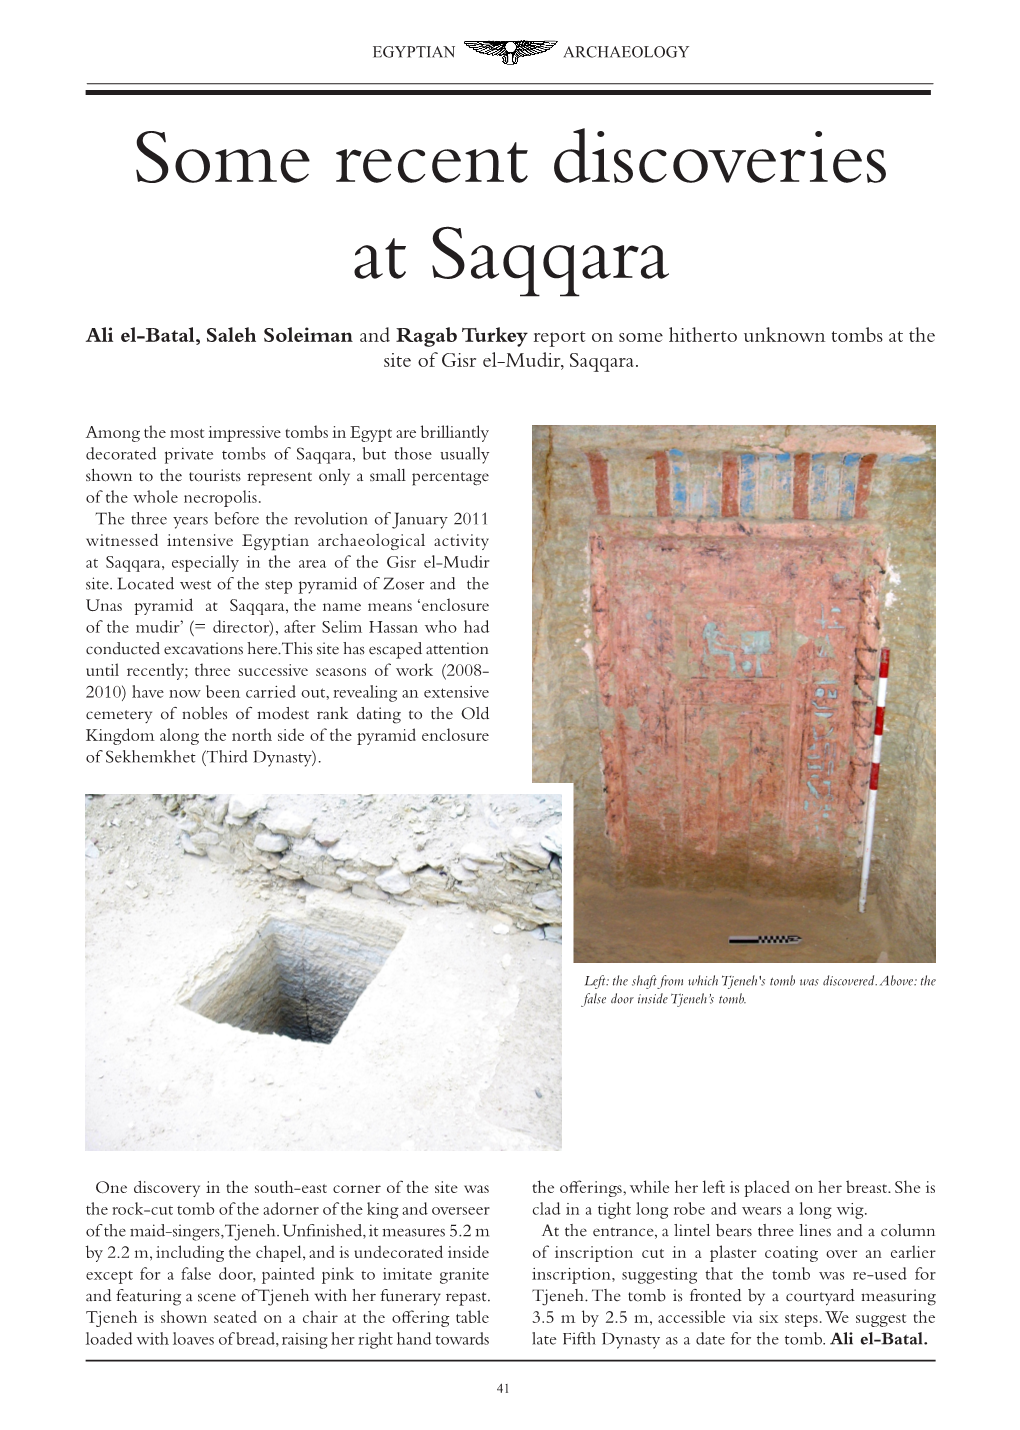 Some Recent Discoveries at Saqqara